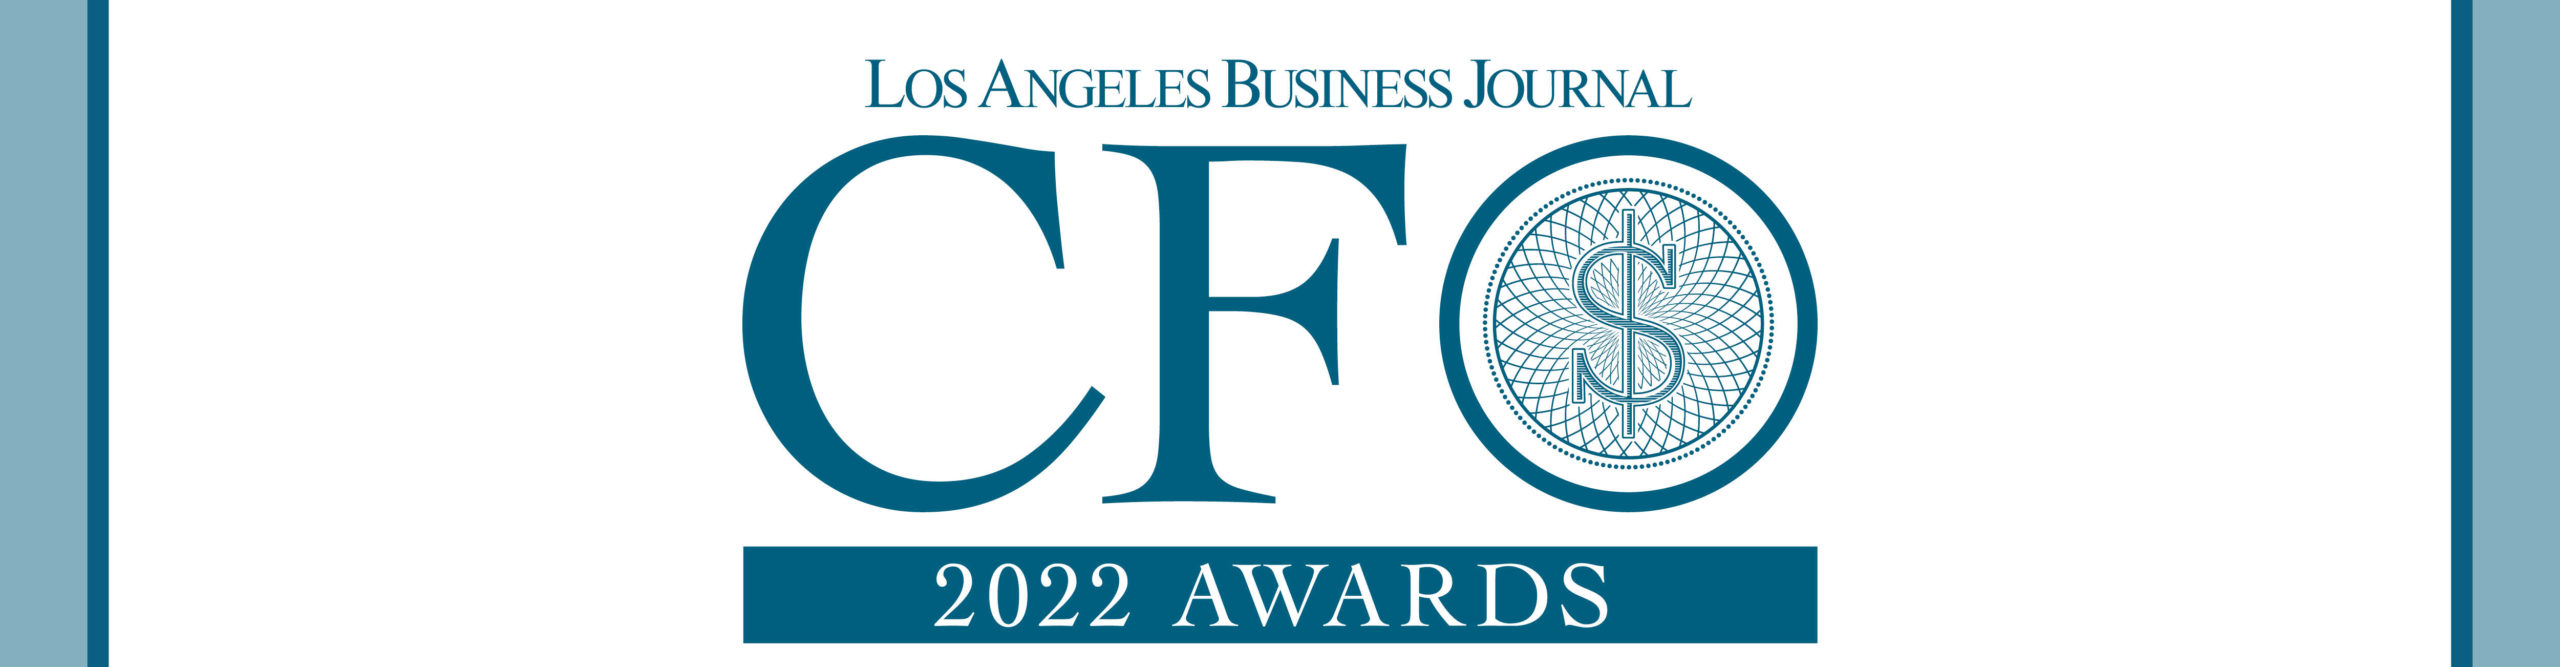 Los Angeles Business Journal CFO Awards Event Banner